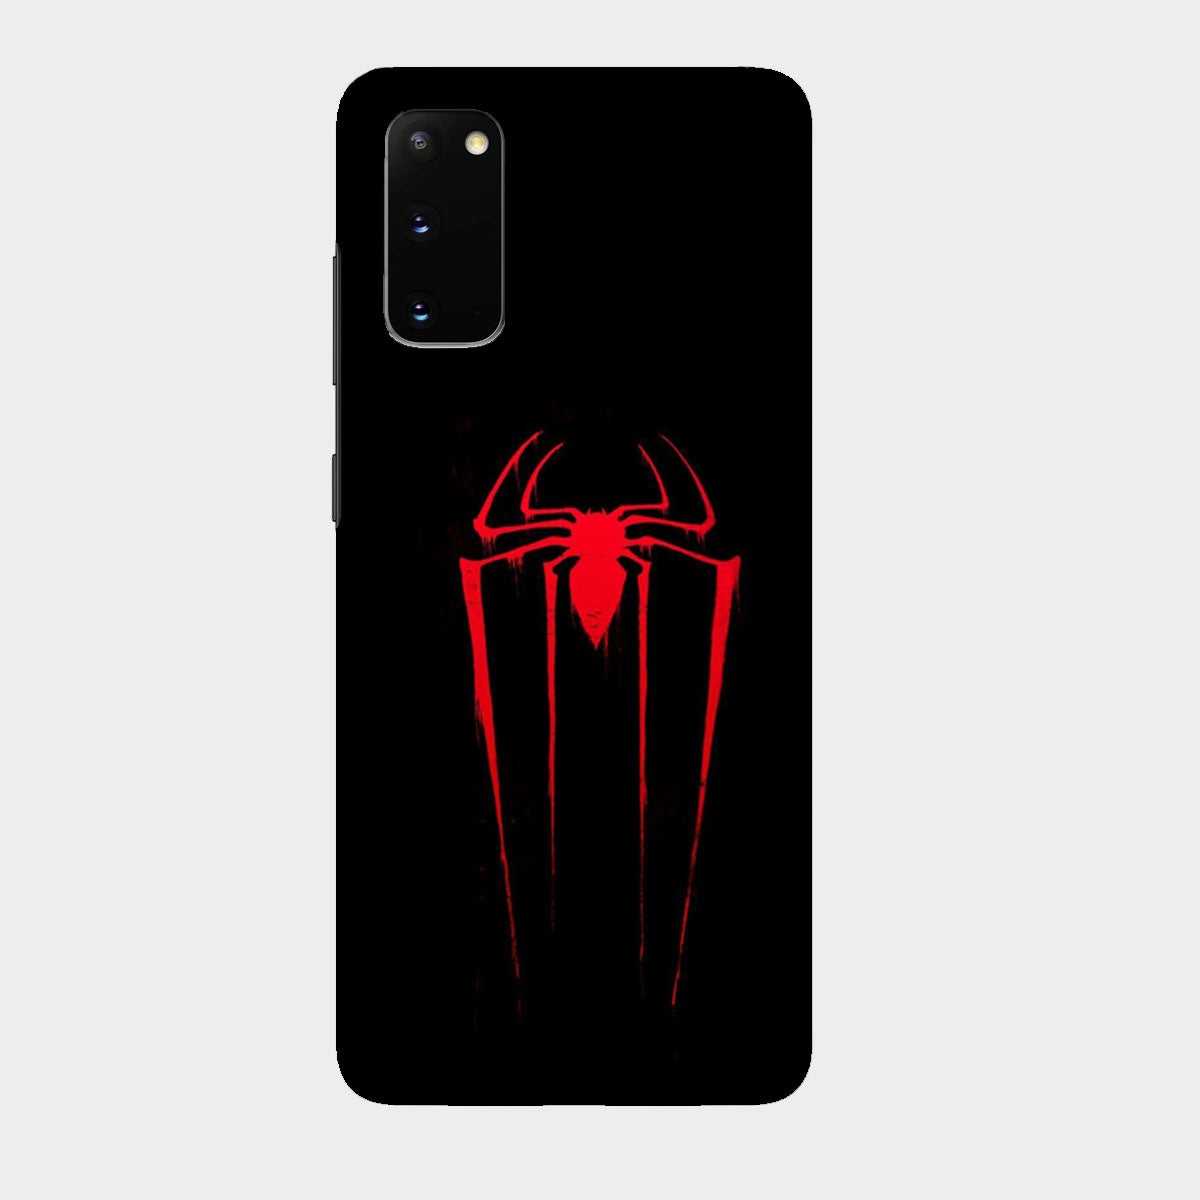 Spider Man - Black - Mobile Phone Cover - Hard Case - Samsung - Samsung